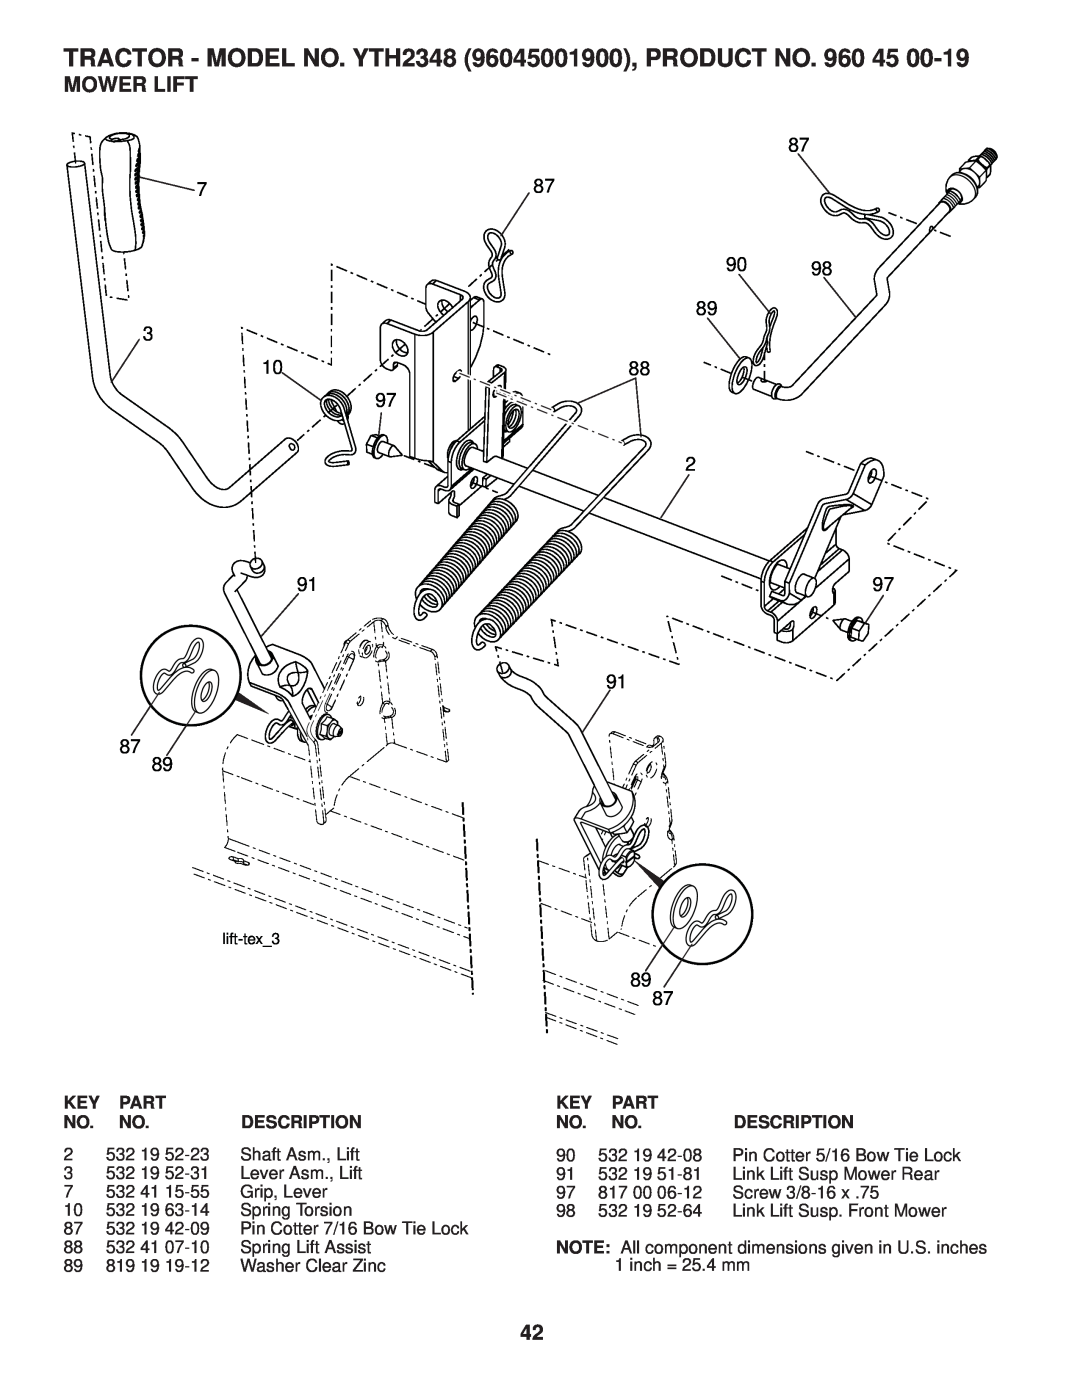 Husqvarna owner manual Mower Lift, TRACTOR - MODEL NO. YTH2348 96045001900, PRODUCT NO. 960, lift-tex3 